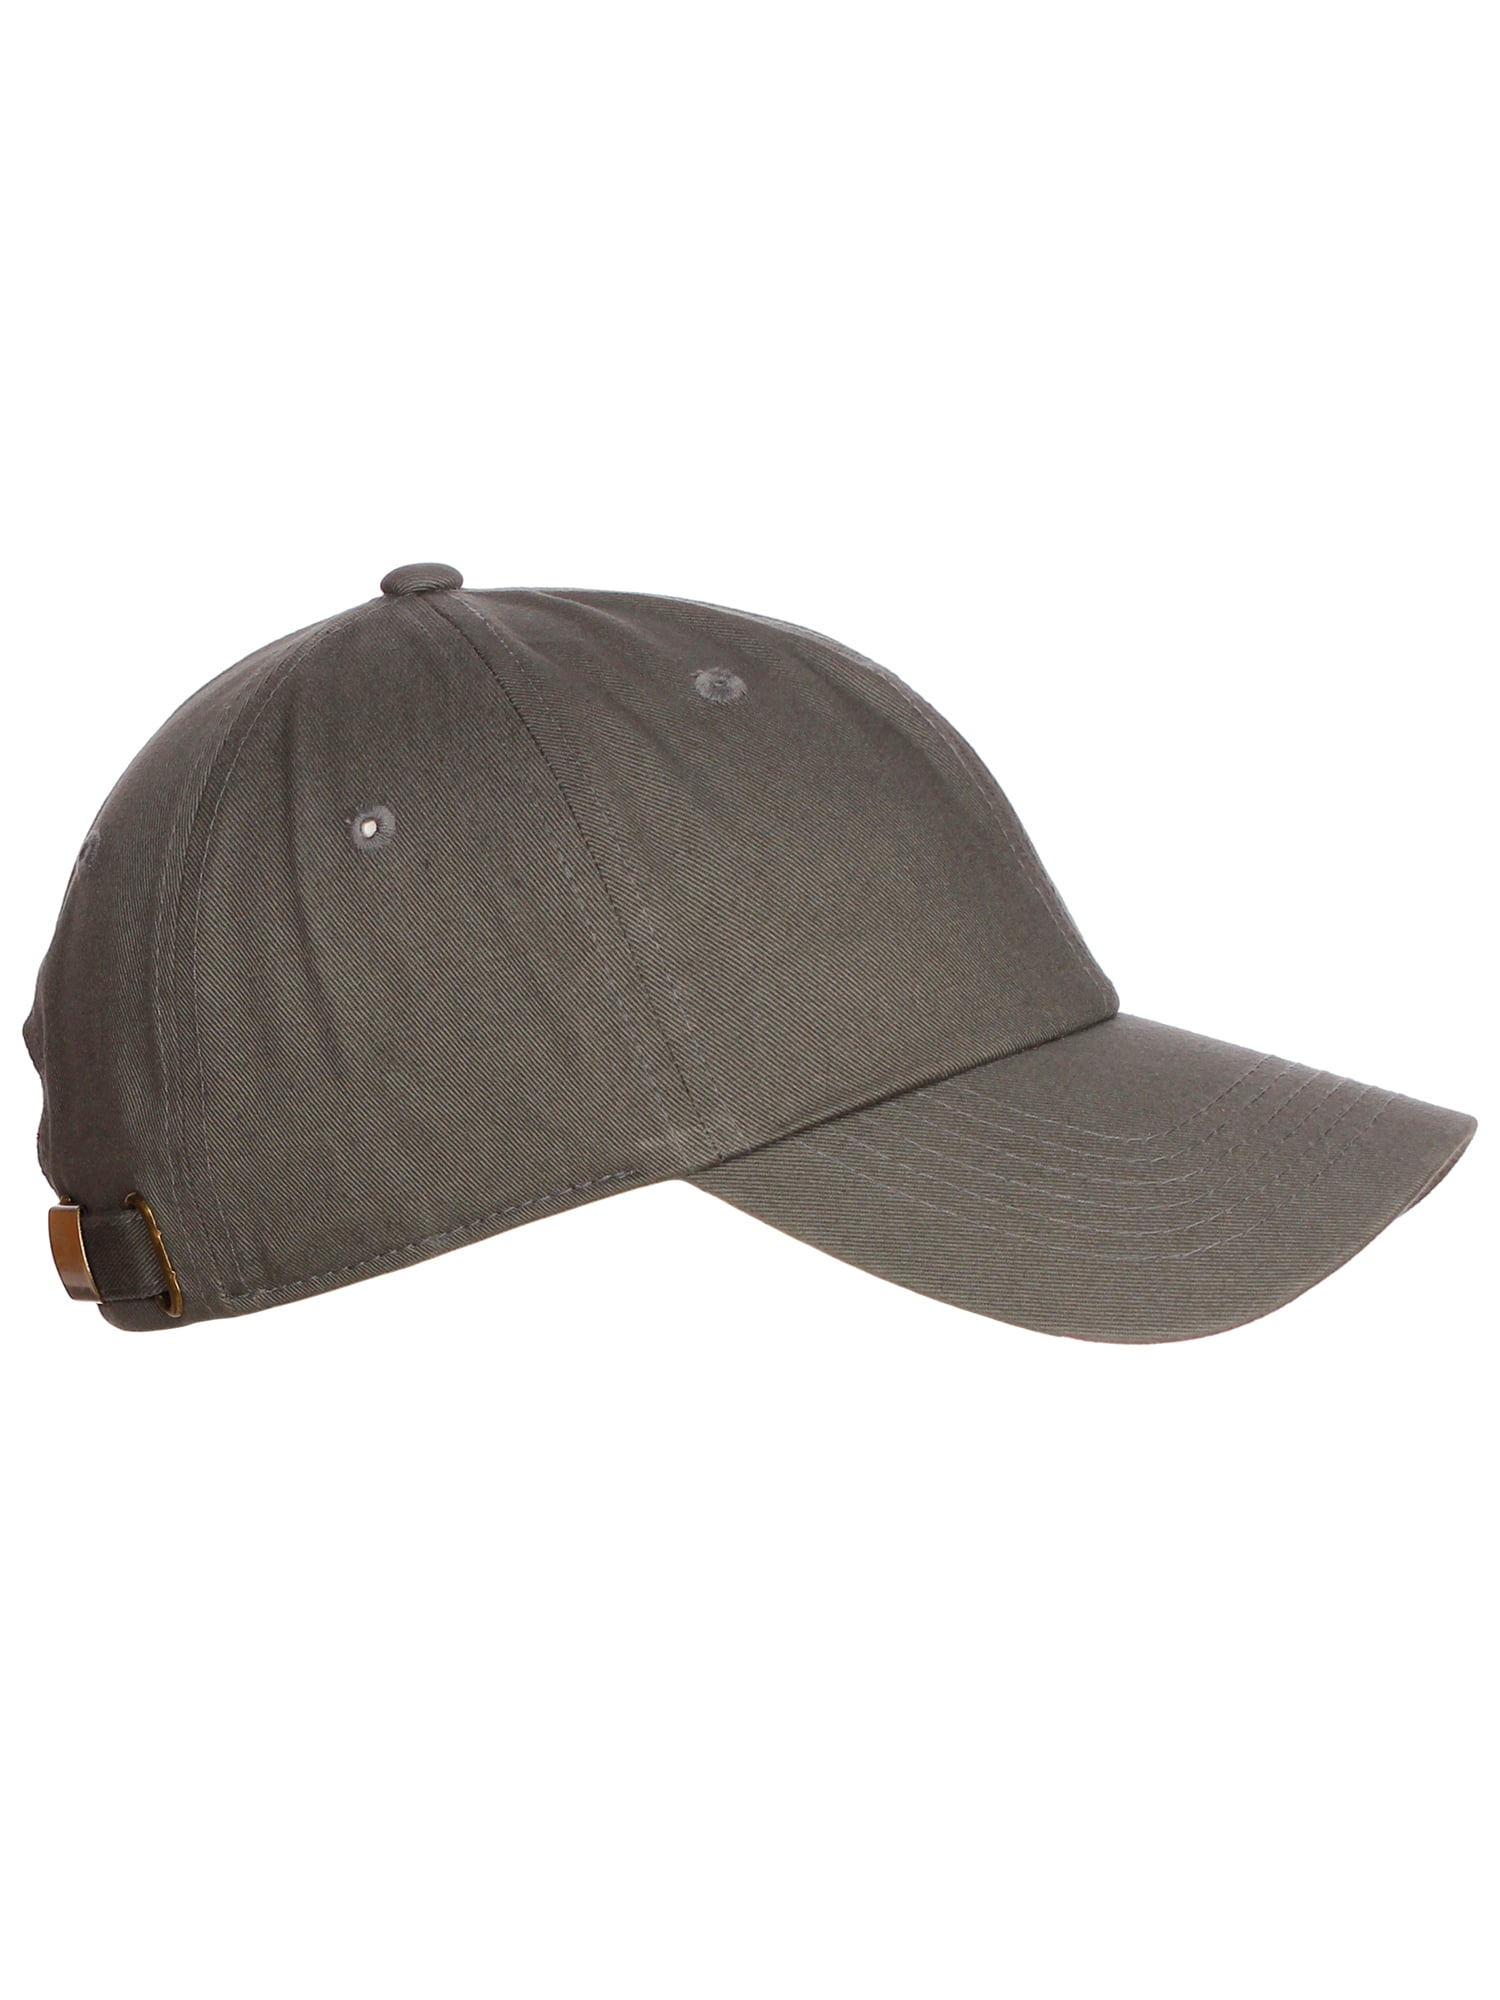 EXO Hip Hop Luminous Adjustable Unisex Black Snapback Baseball Cap Sun Hat Gift 